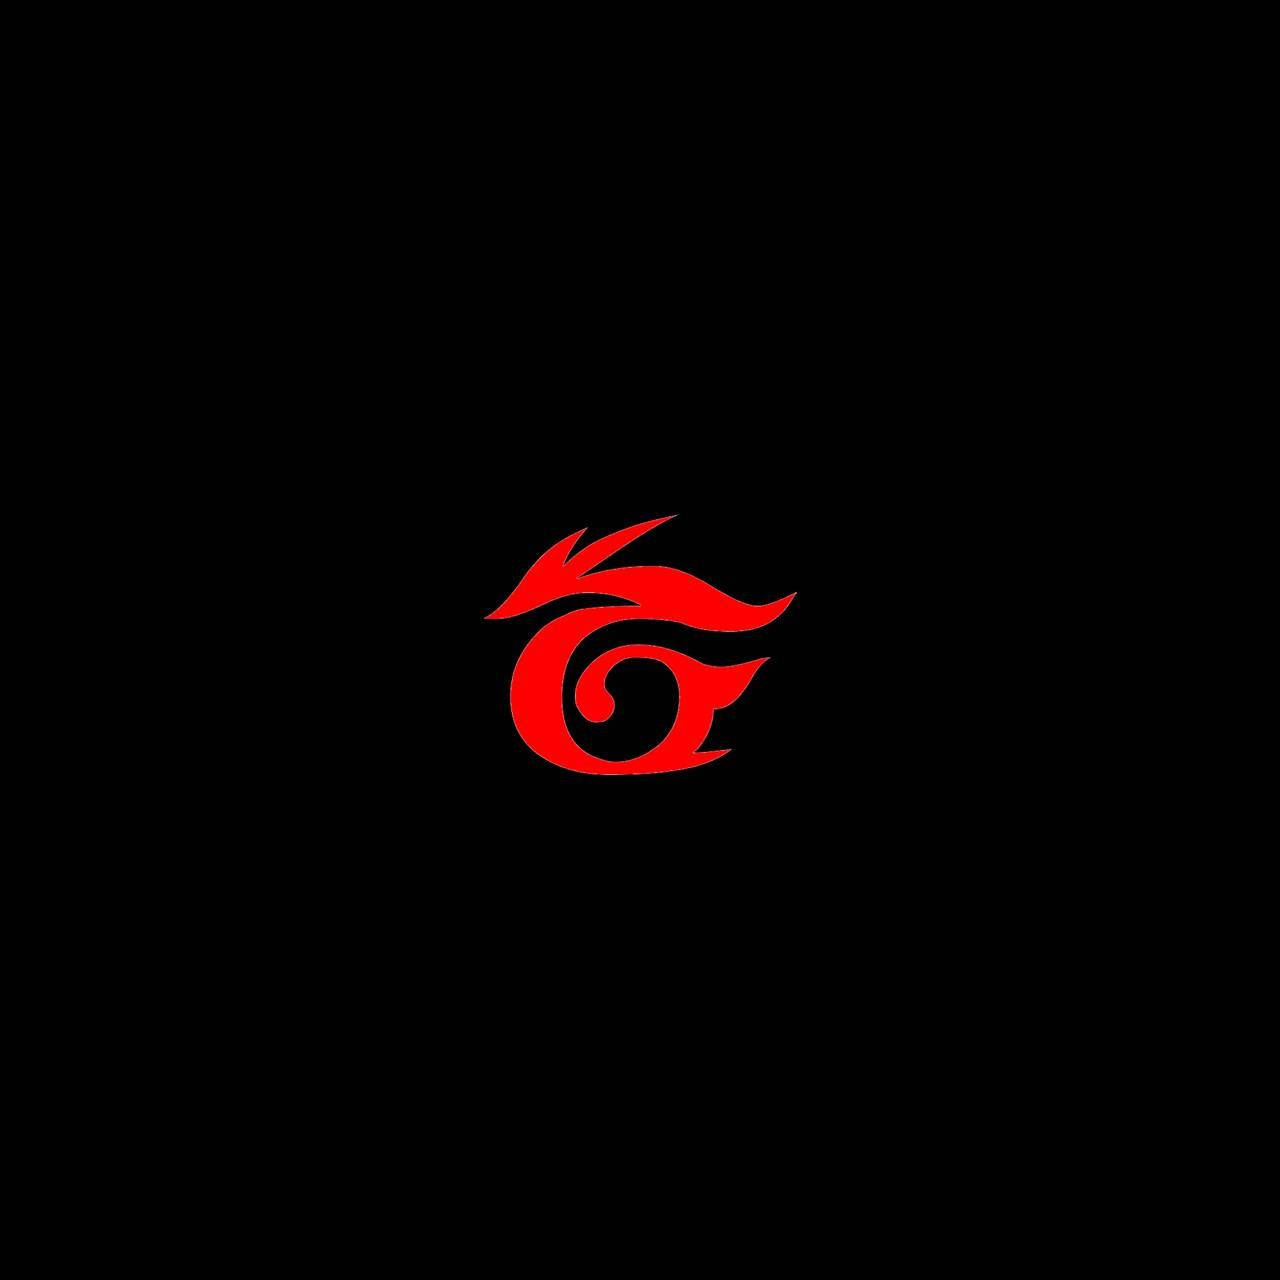 Garena Tiny Red Logo Wallpaper